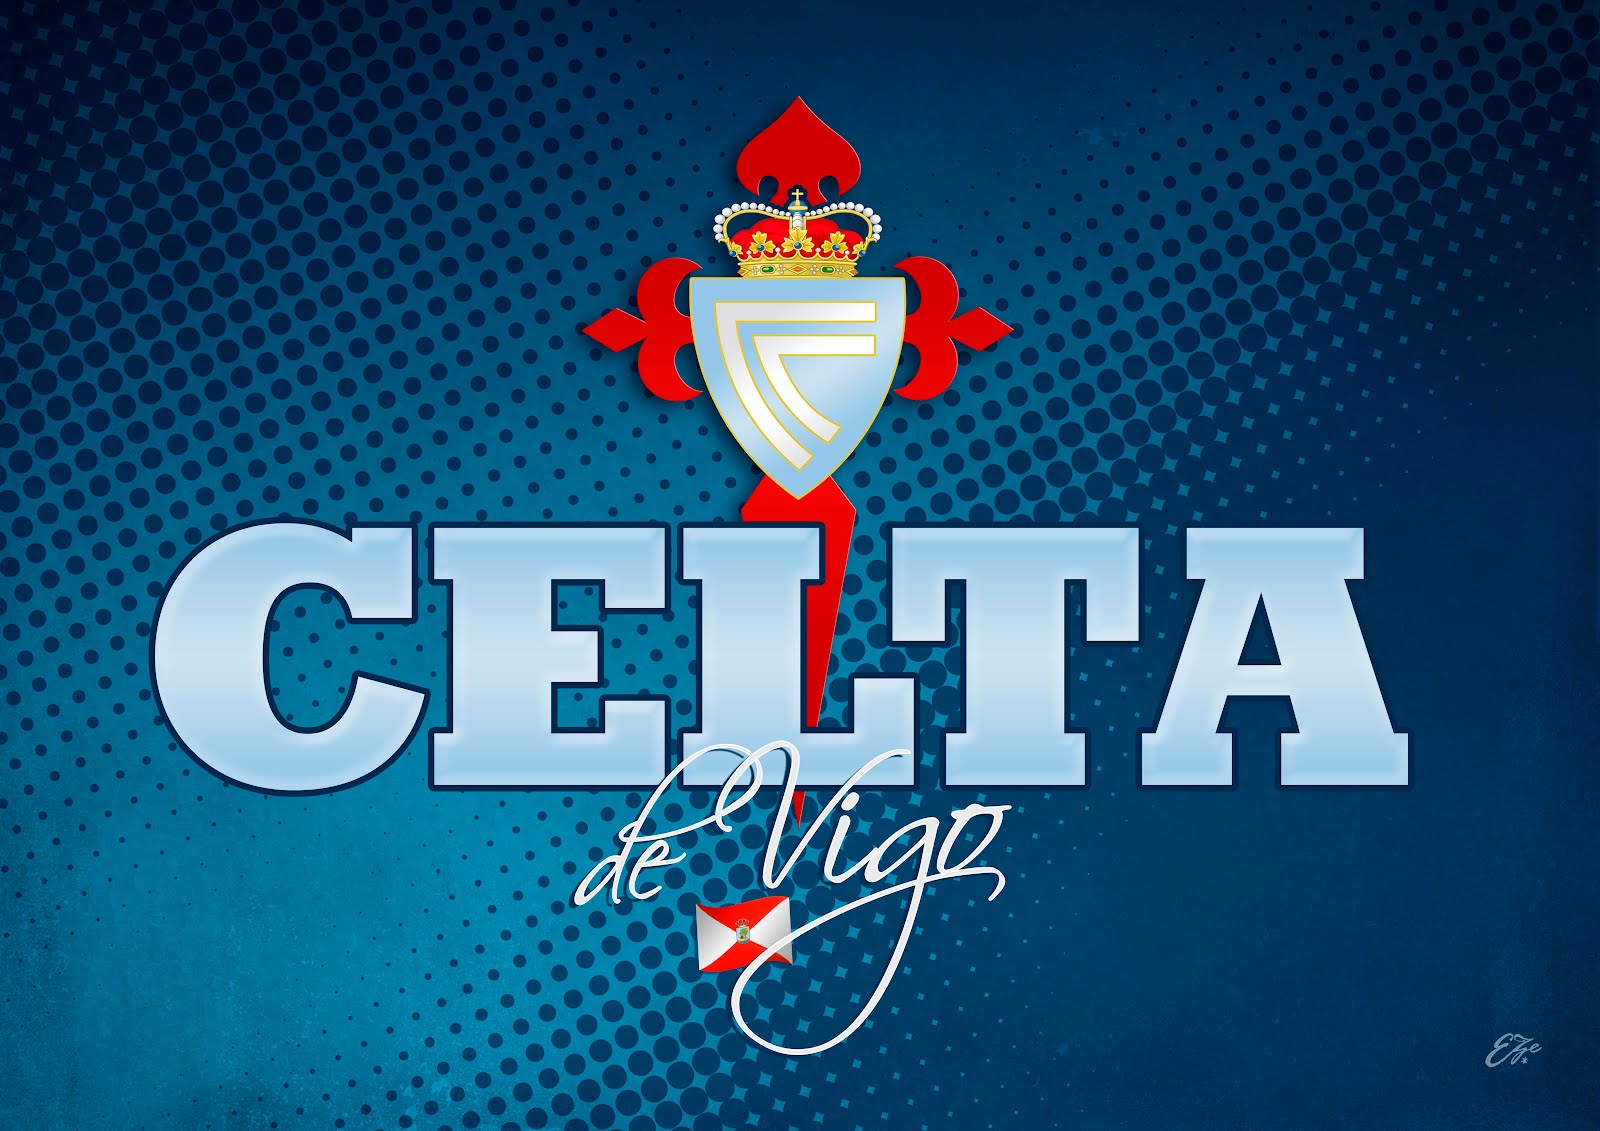 Celta Vigo recevra le premier, le FC Barcelone